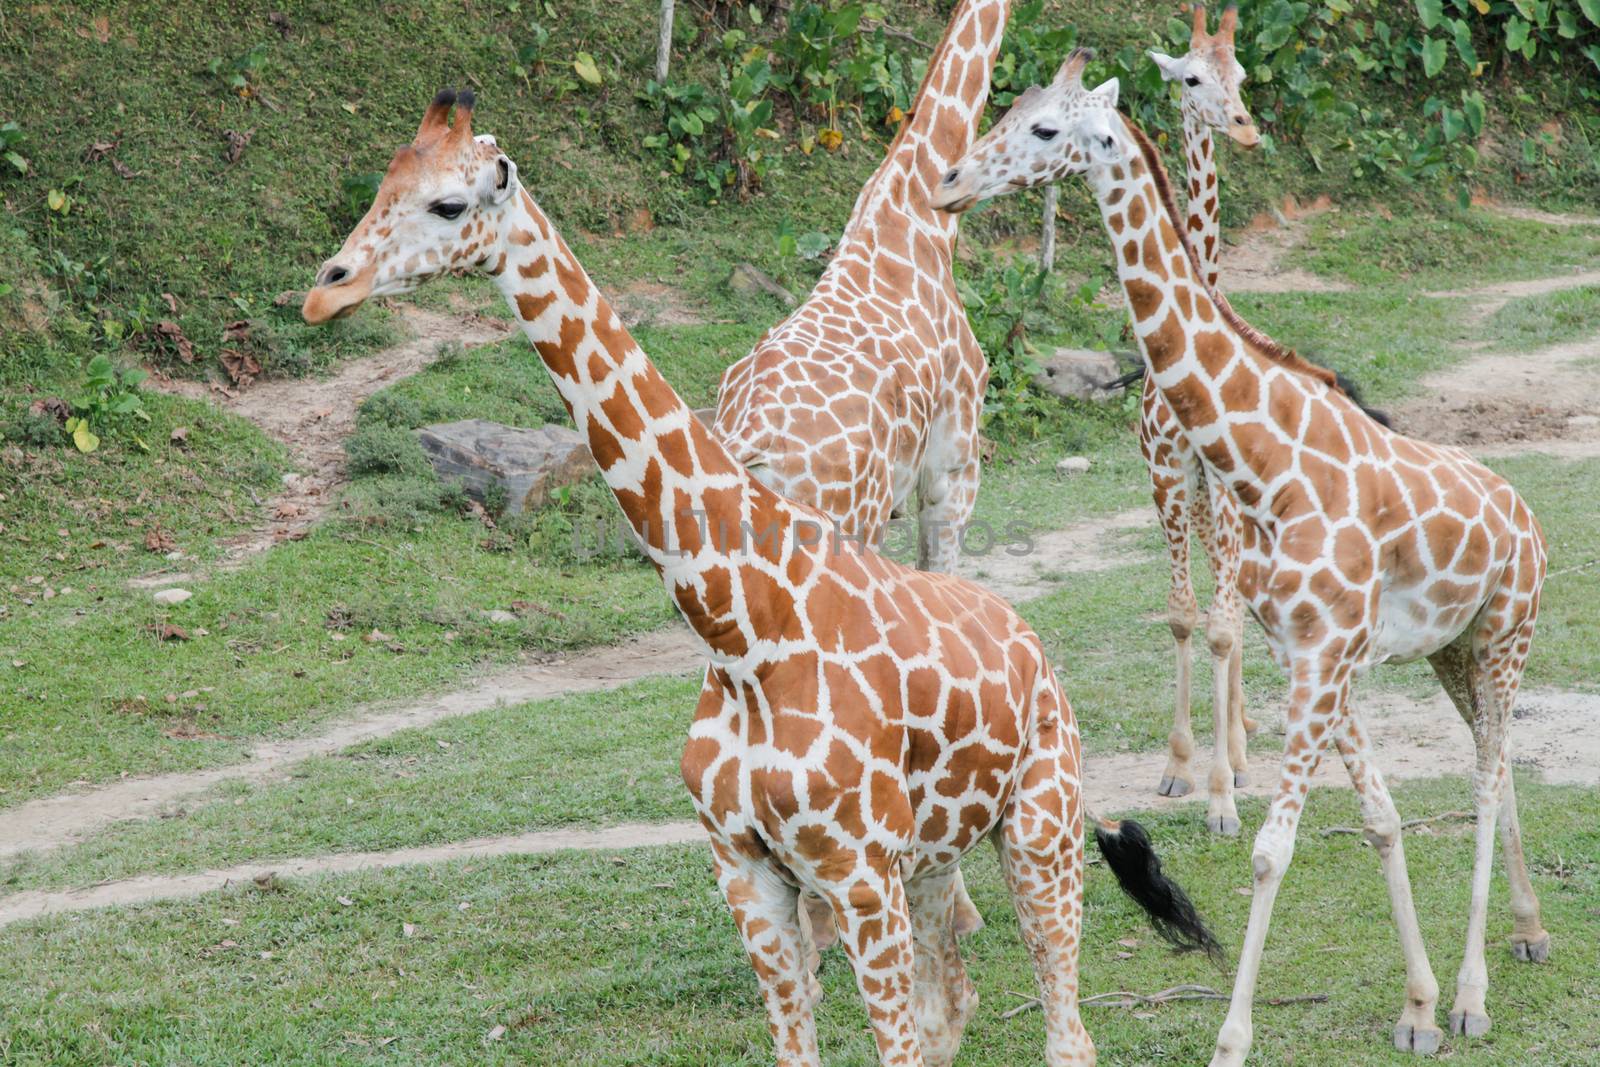 Giraffe out in safari jungle by haiderazim